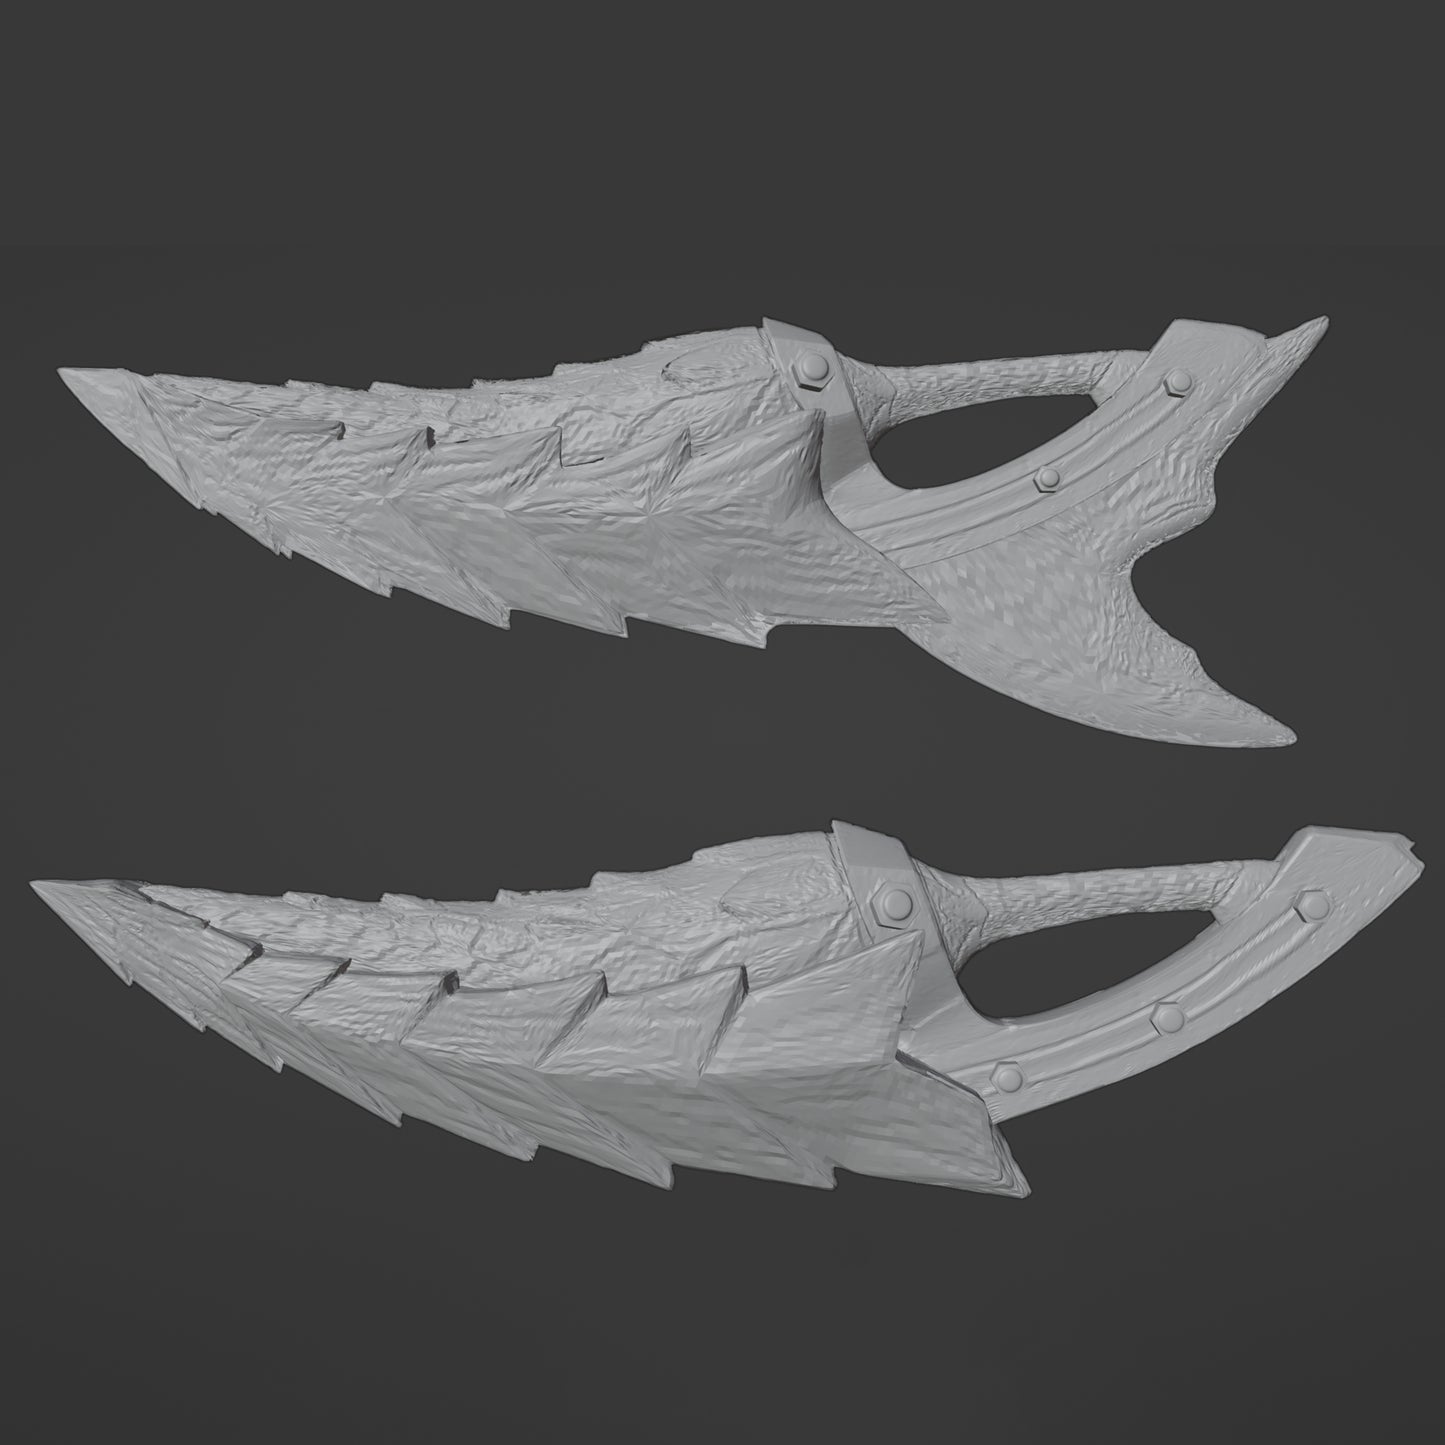 Usurper's Fulgur - Digital 3D Model Files and Physical 3D Printed Kit Options - Dual Blades